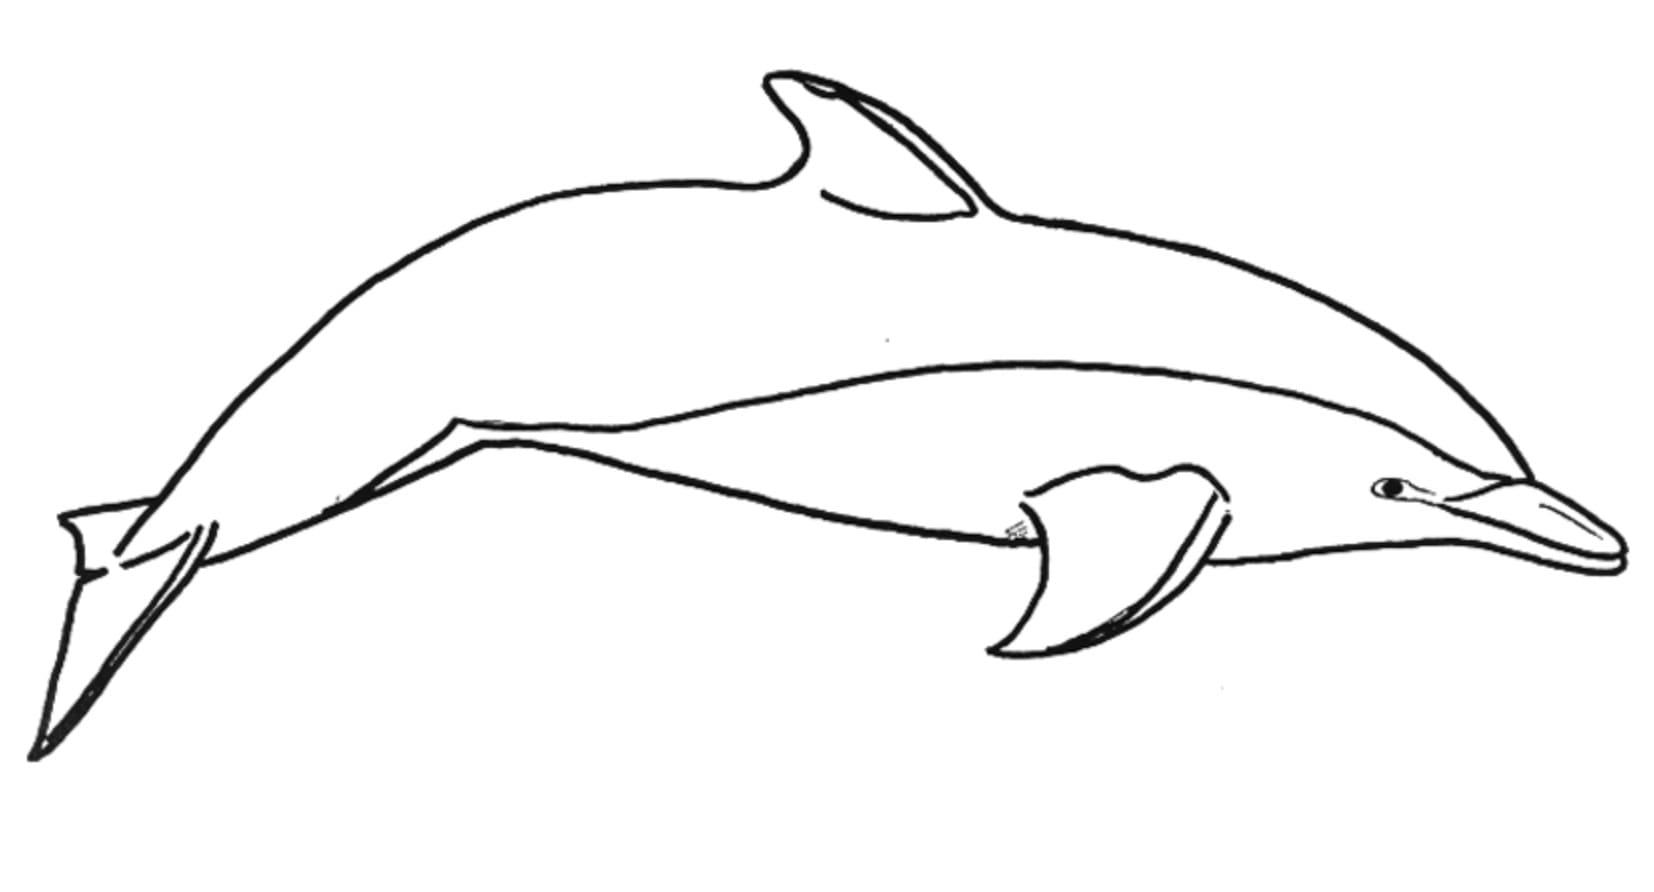 Dolfijn